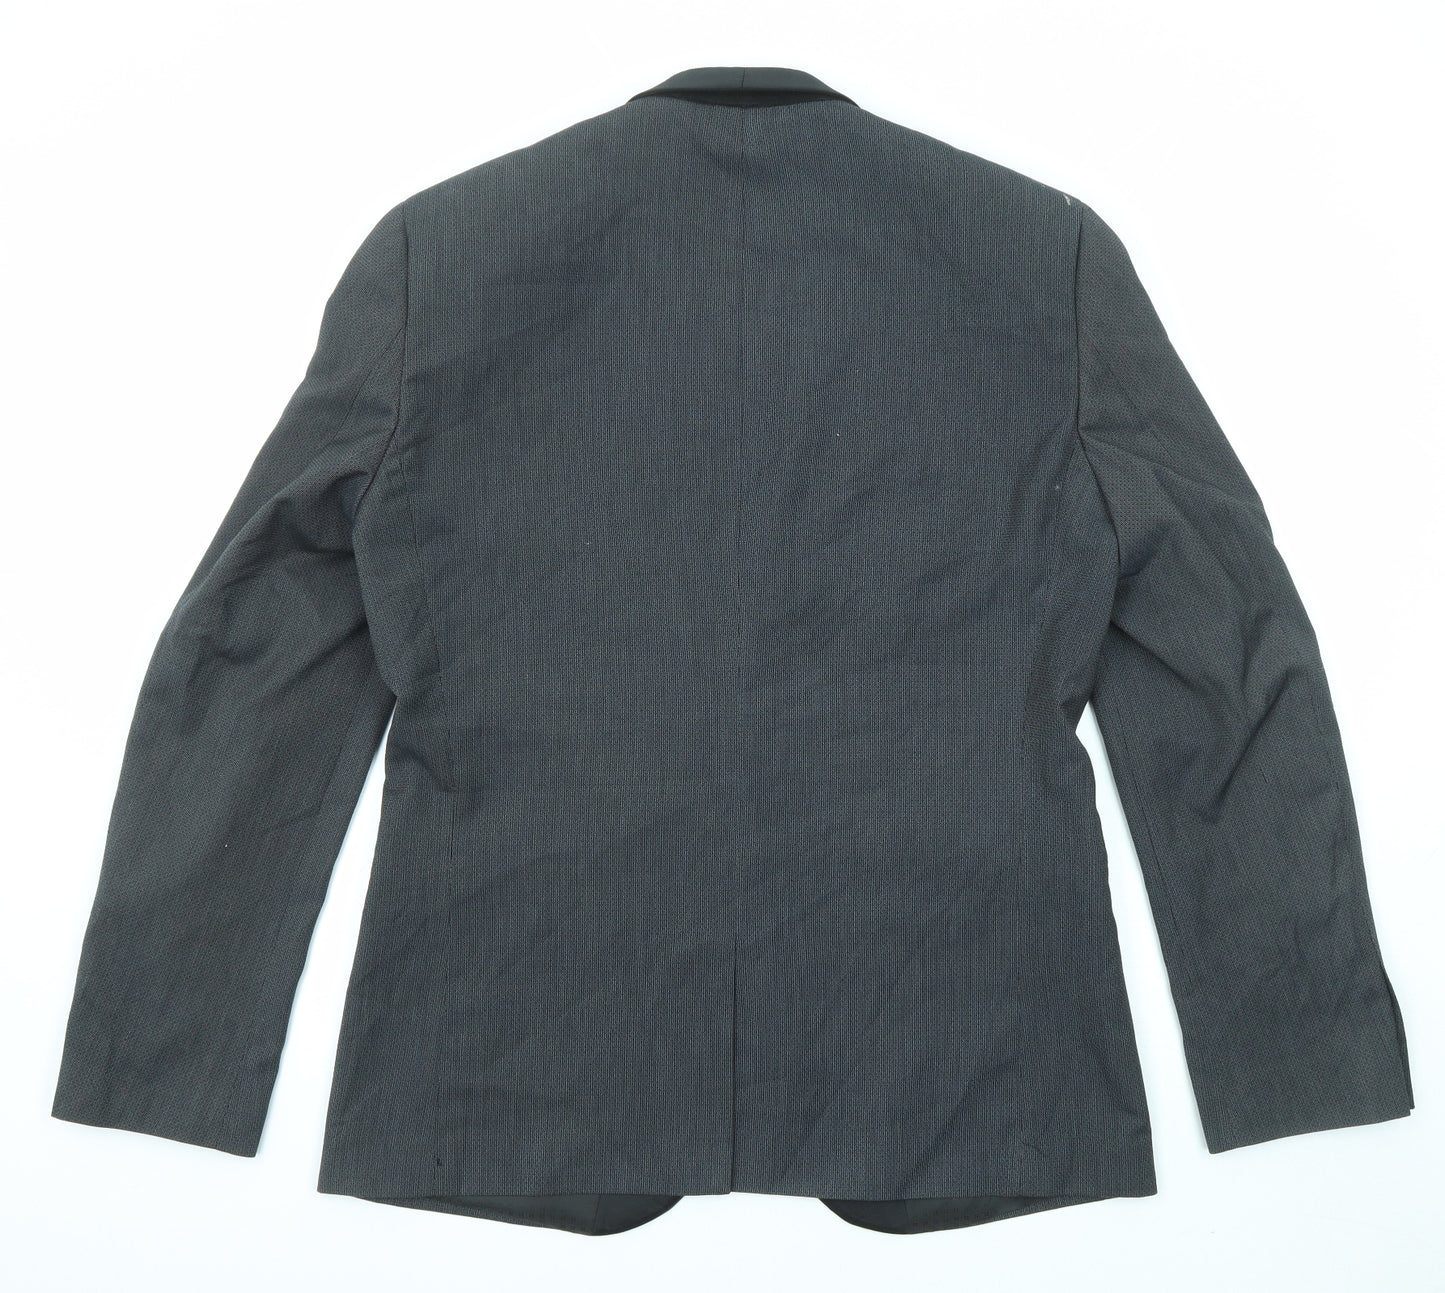 NEXT Mens Black Striped Polyester Tuxedo Suit Jacket Size 42 Regular